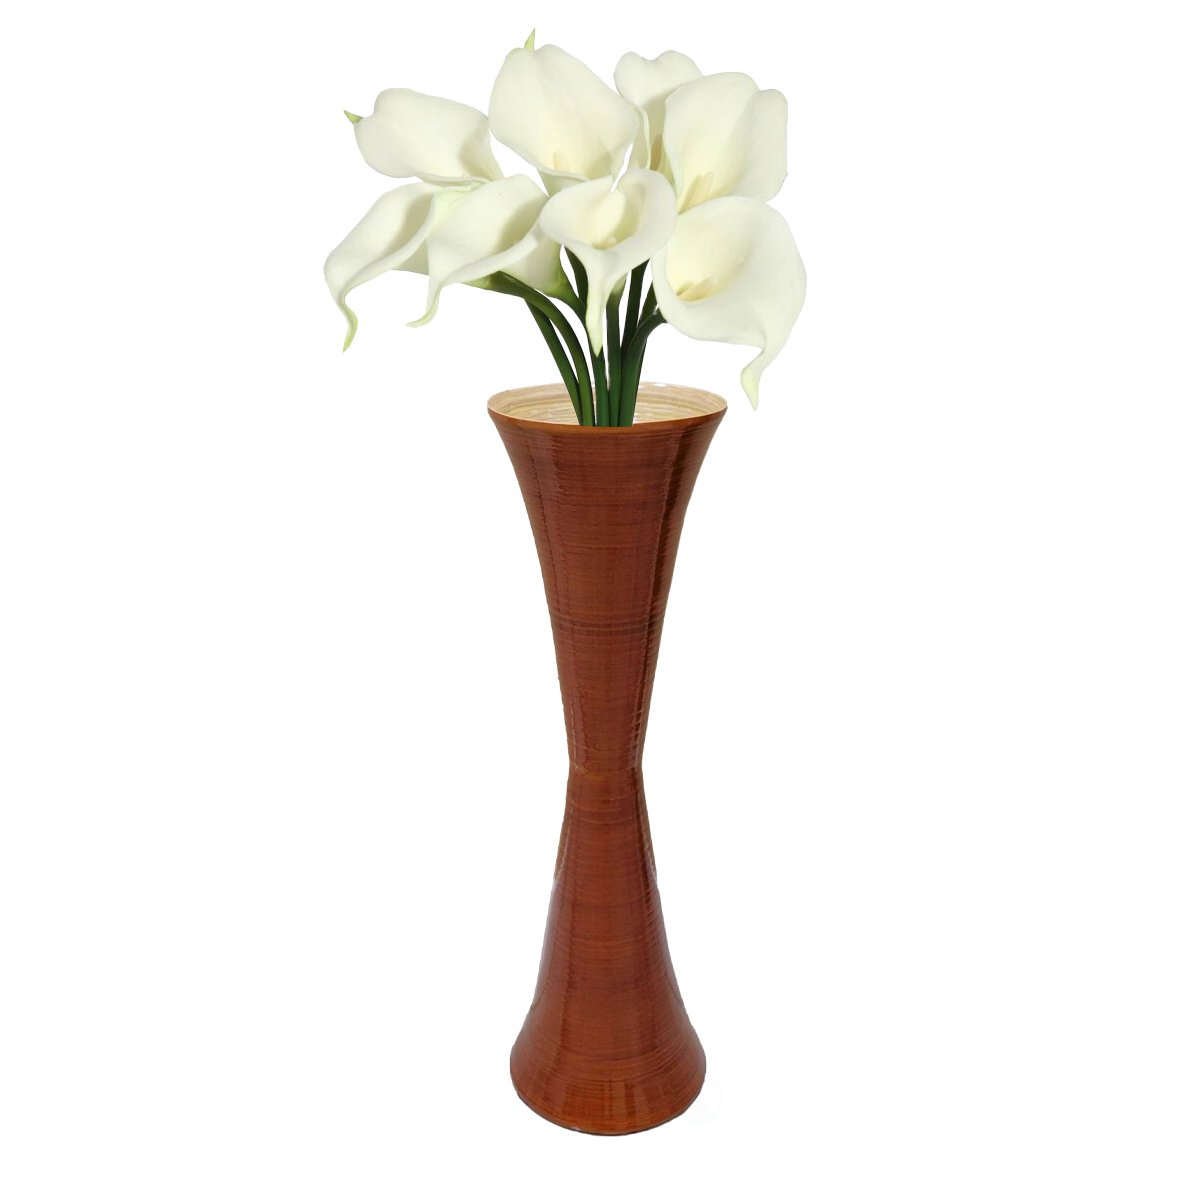 Decorative Modern Bamboo Display Floor Vase Hourglass Shape, 27 Inch - Brown